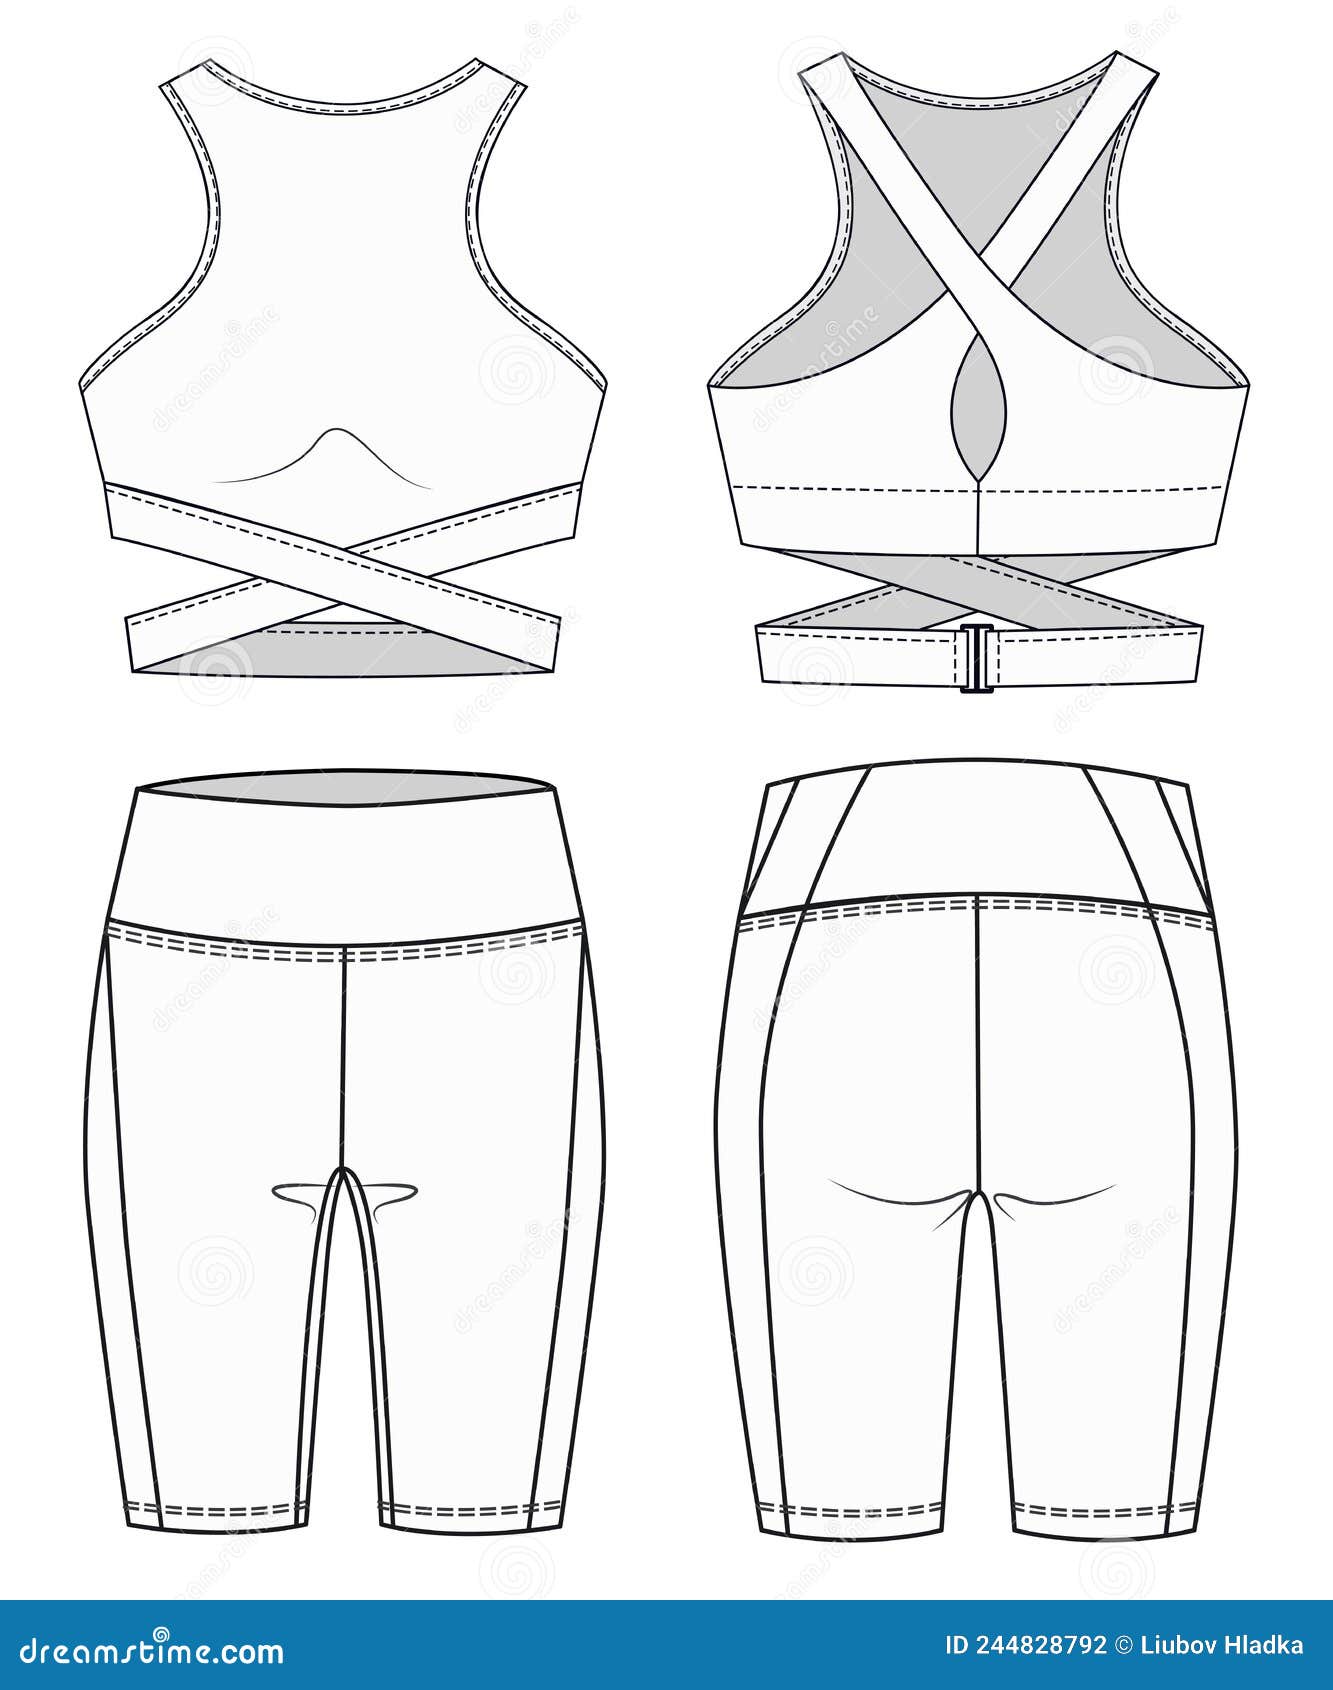 https://thumbs.dreamstime.com/z/girls-sports-bra-cycling-shorts-fashion-flat-sketch-template-women-active-wear-crop-top-leggings-technical-illustration-front-244828792.jpg